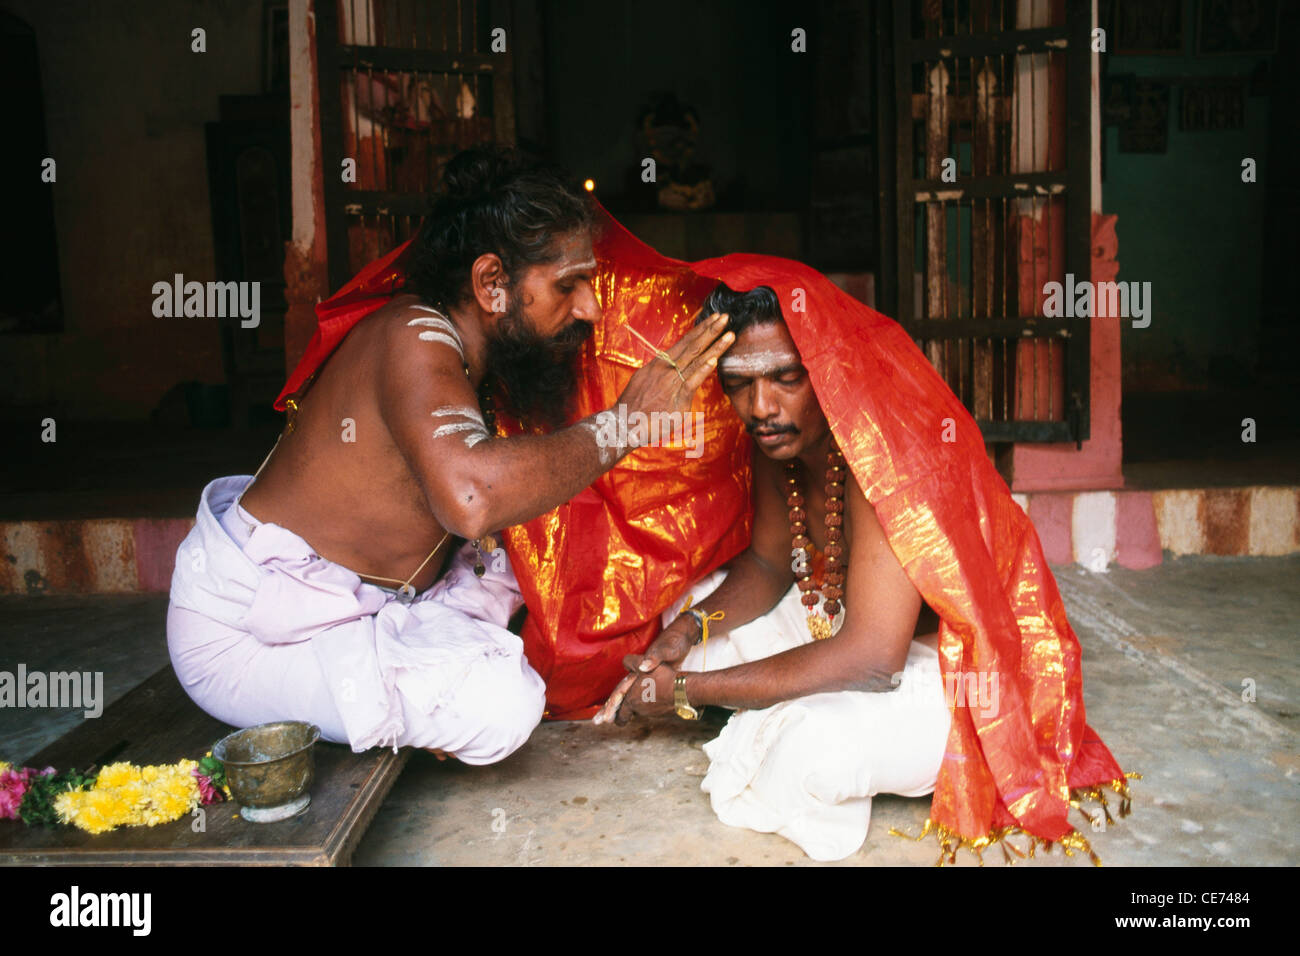 Hindu community ritual, Tamil Nadu, India, Asia, Indian, Asian, MR#777A, dpa 82885 maa Stock Photo